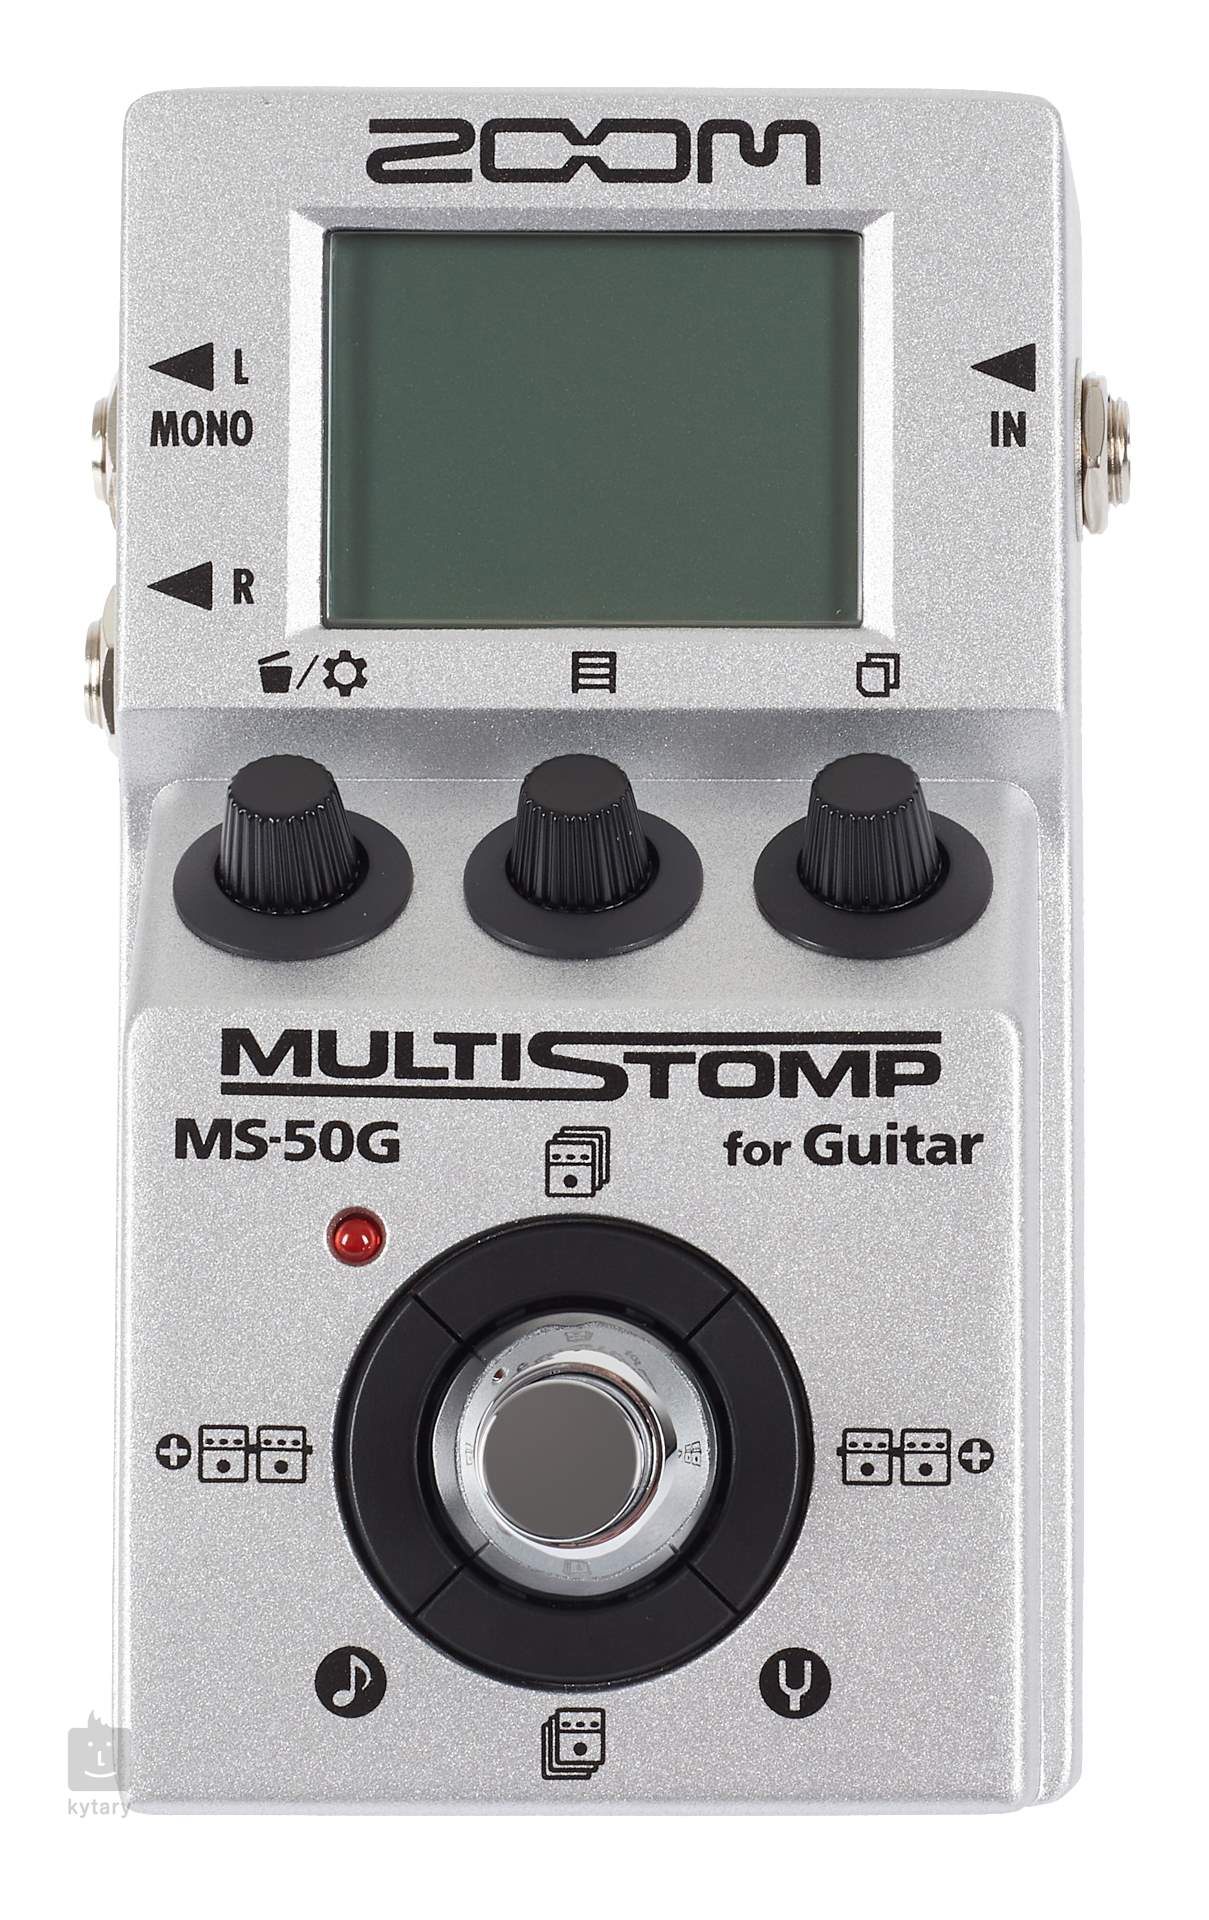 MULTI STOMP MS-50G for Guitar